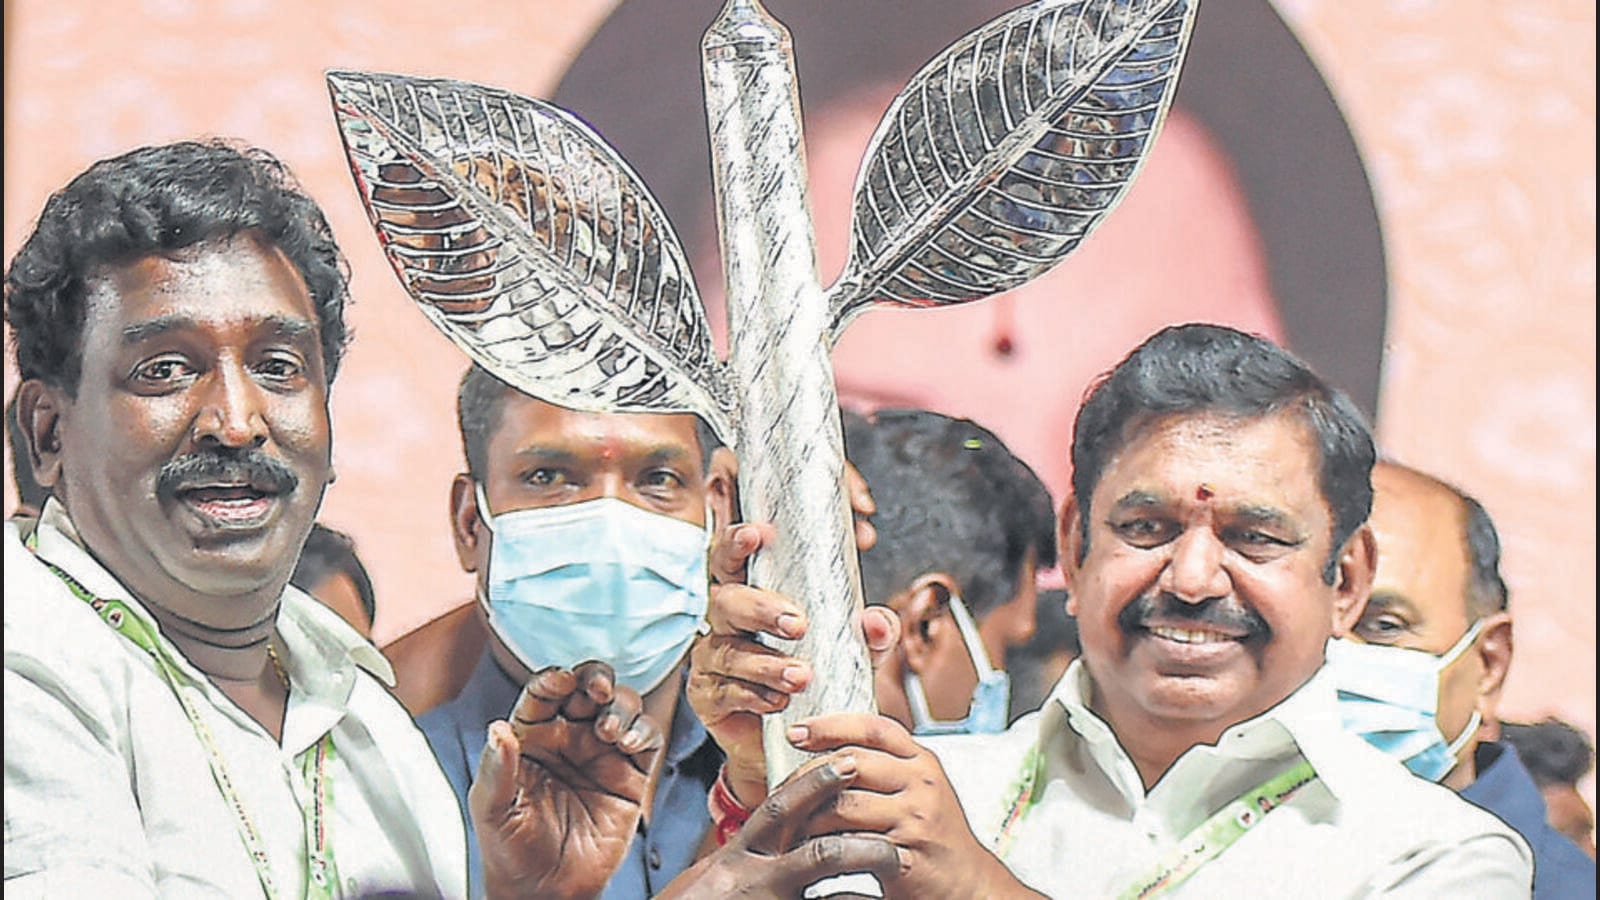 olympiad: Madras HC orders Tamil Nadu govt to publish photos of